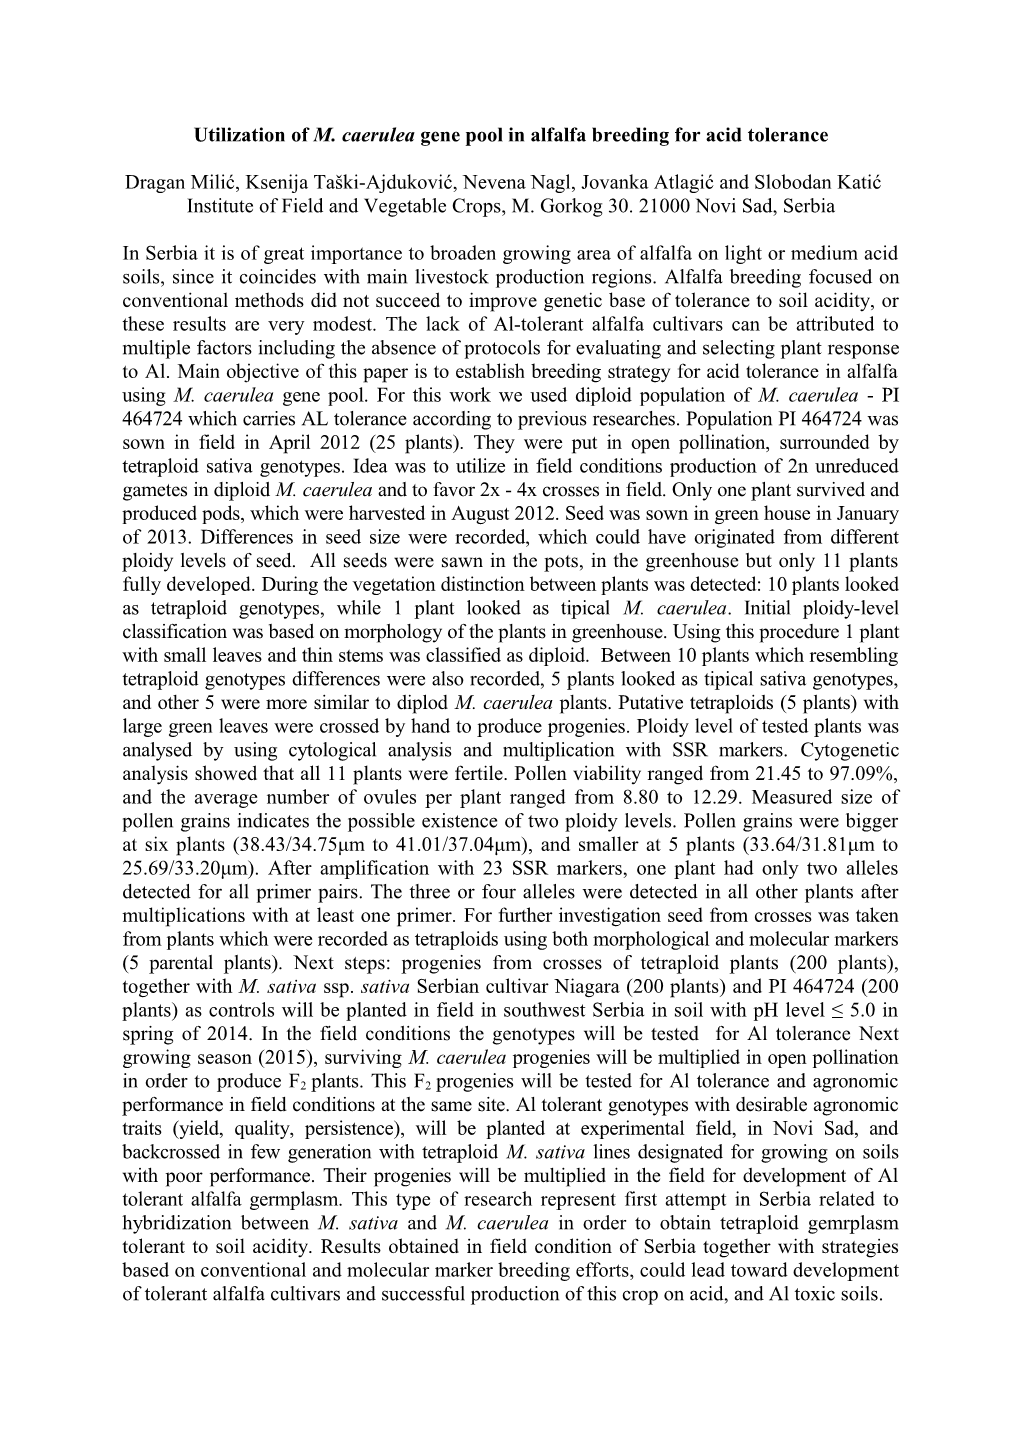 Utilization of M. Caerulea Gene Pool in Alfalfa Breeding for Acid Tolerance